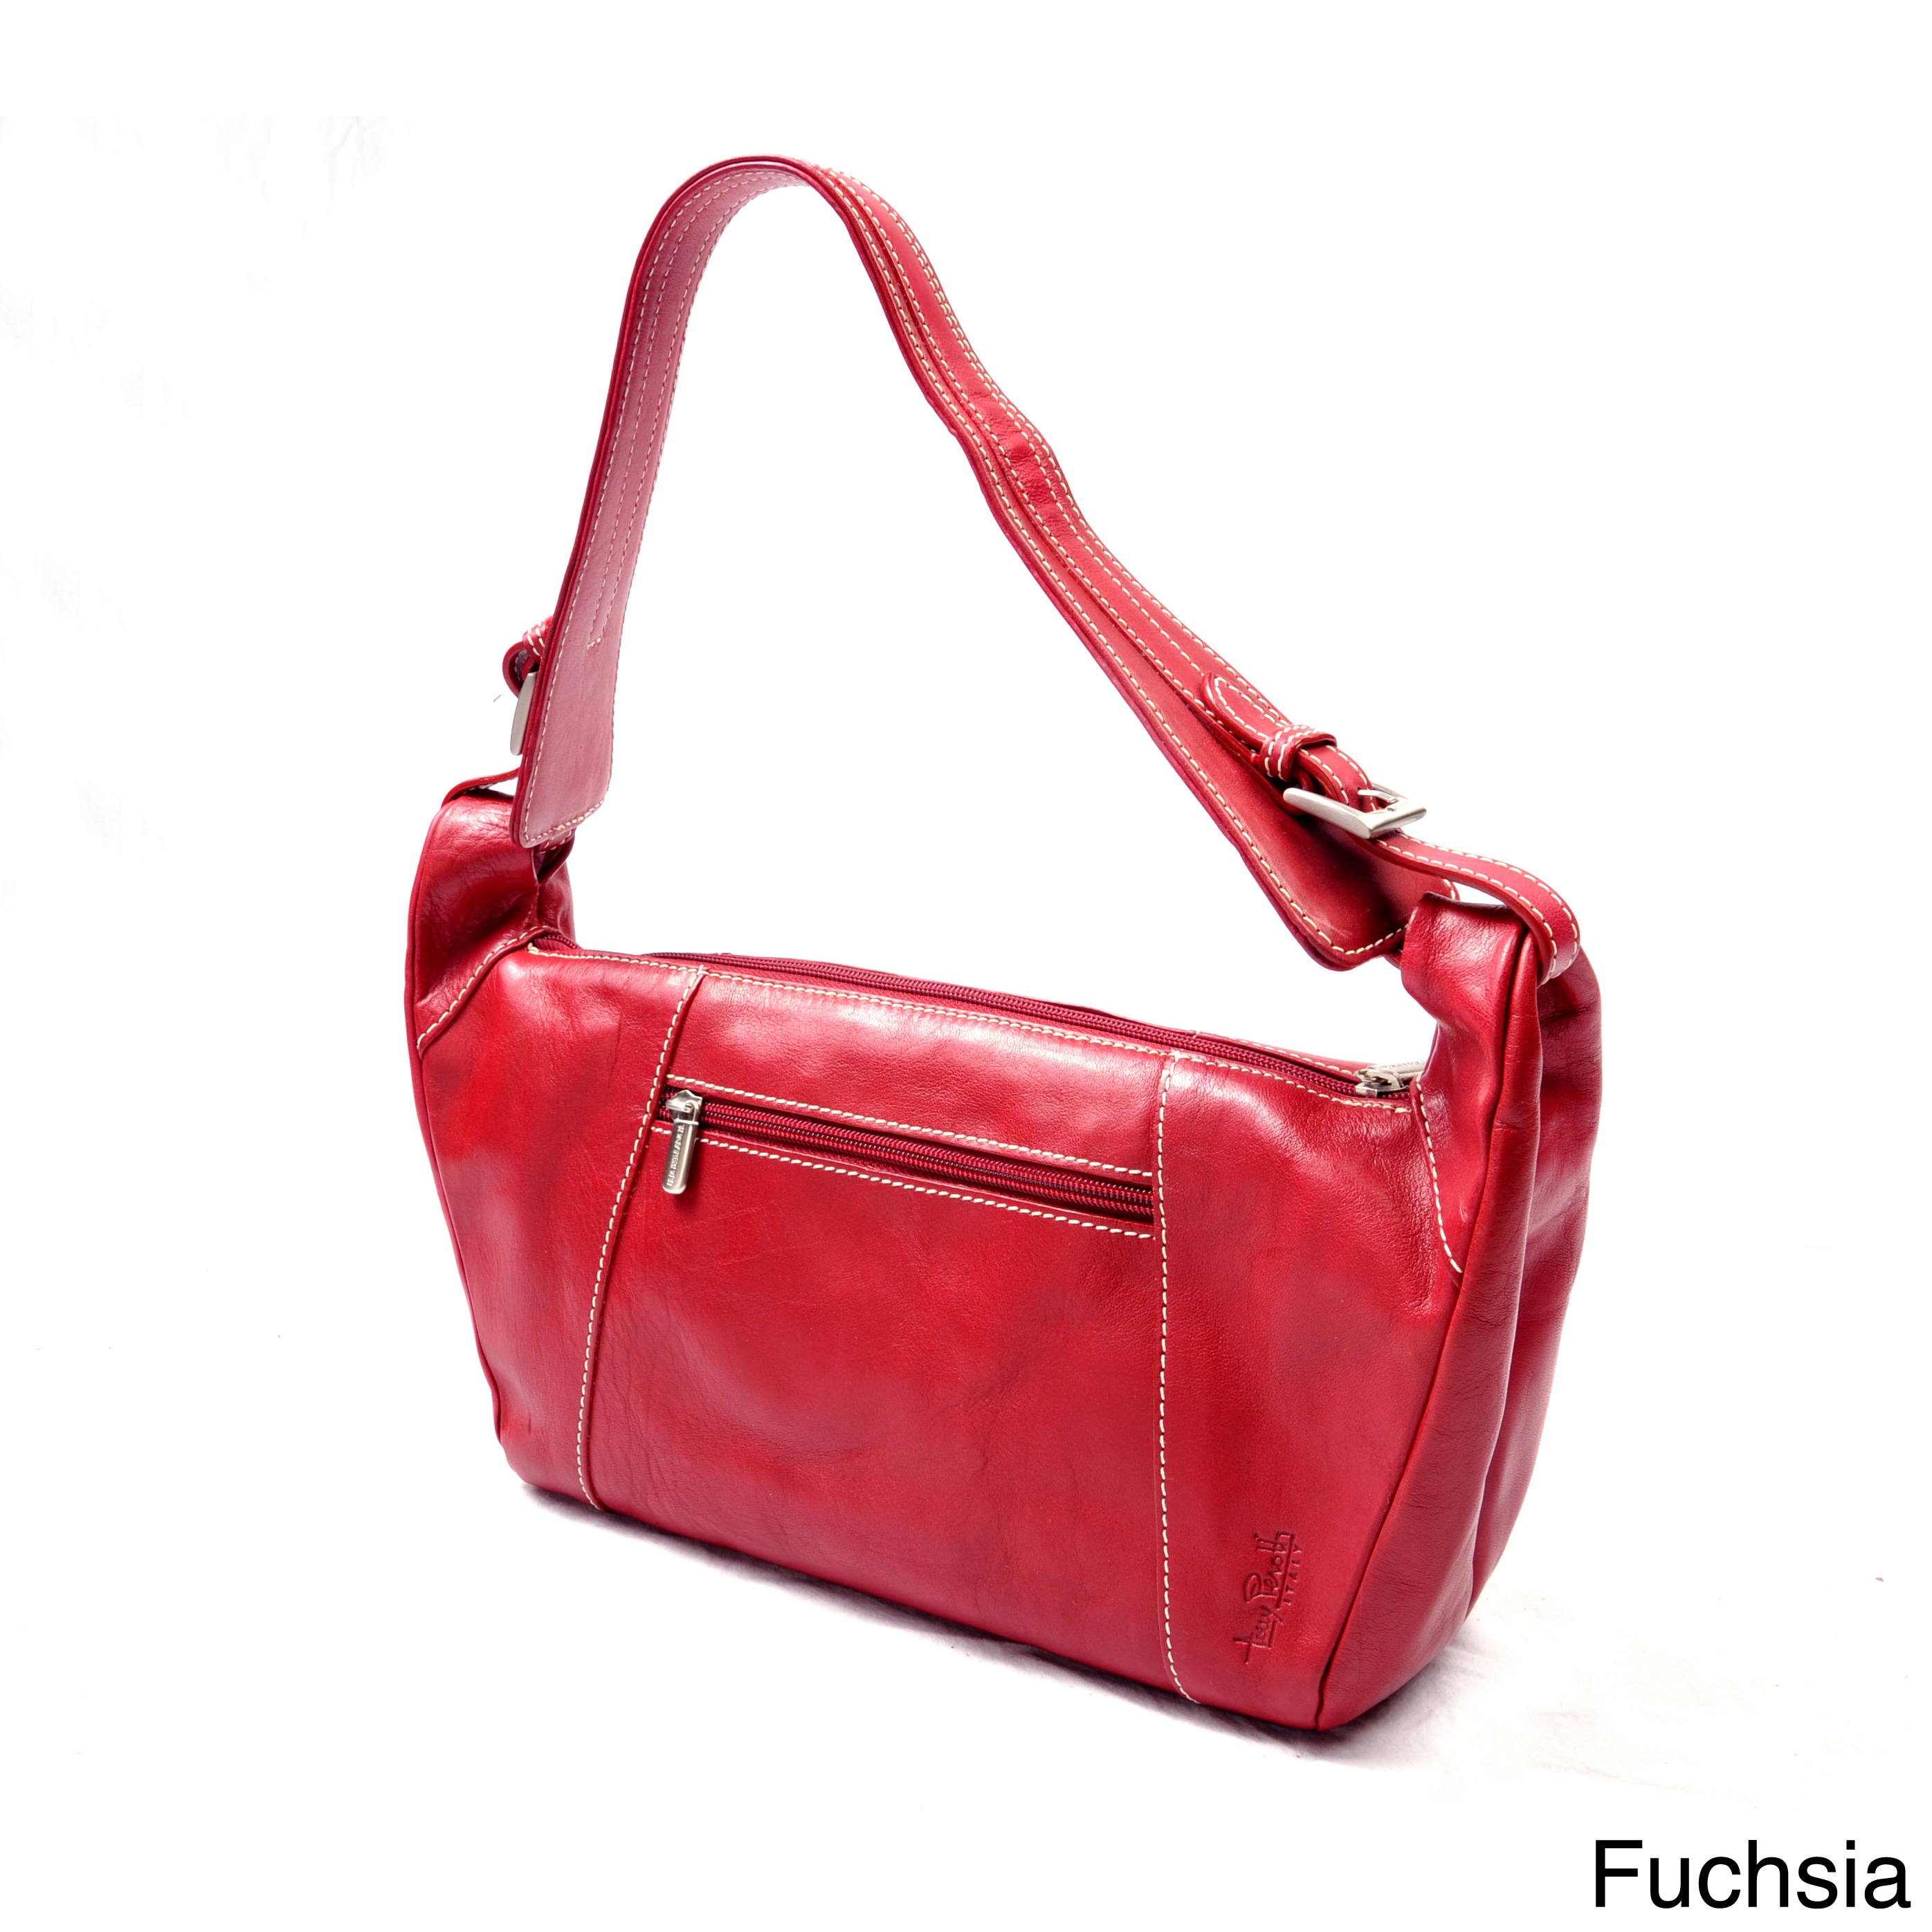 Tony Perotti Handbags Shoulder Bags, Tote Bags and